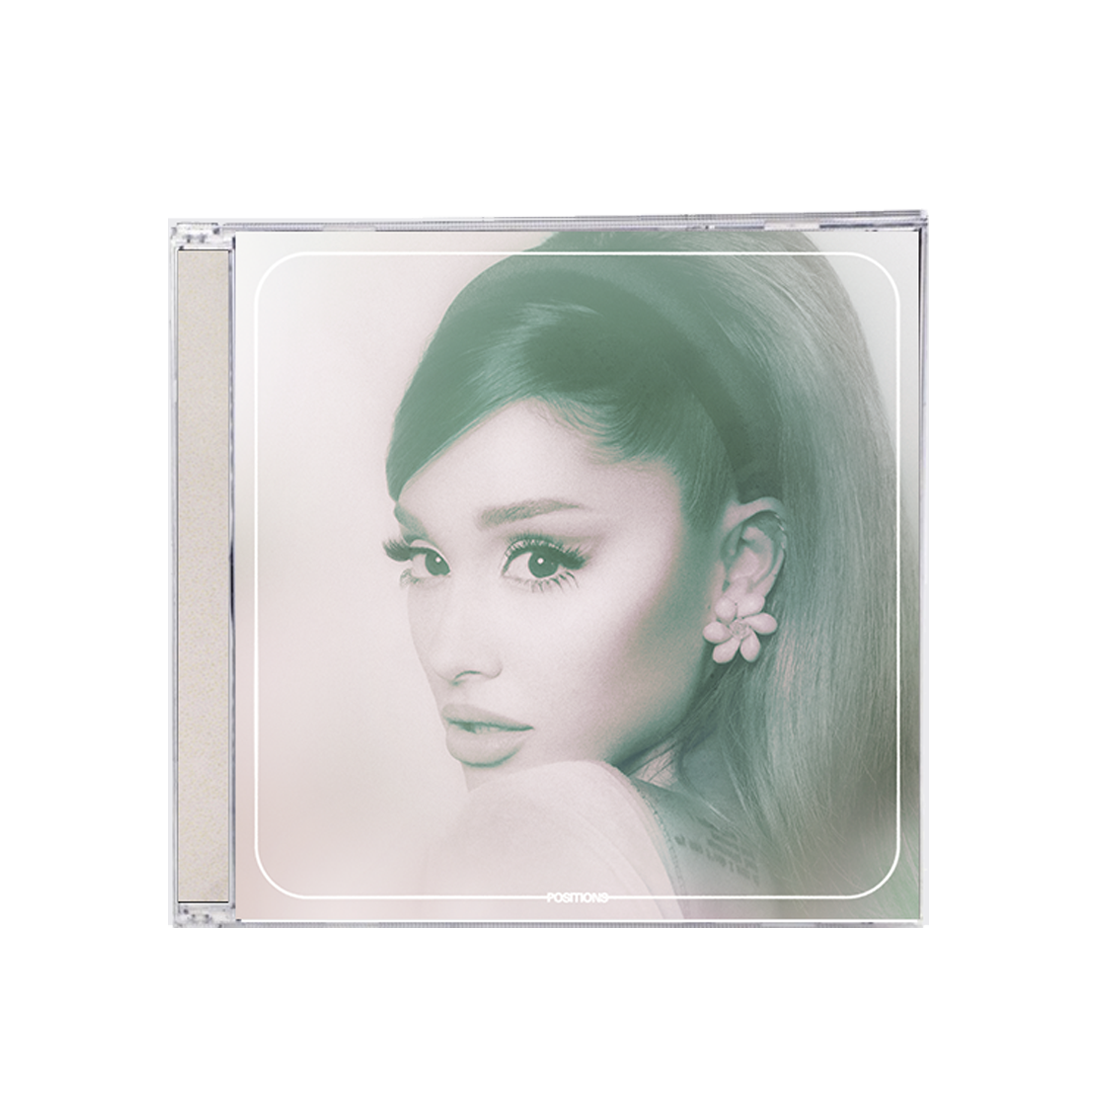 positions deluxe vinyl  Ariana grande album, Ariana grande, Vinyl